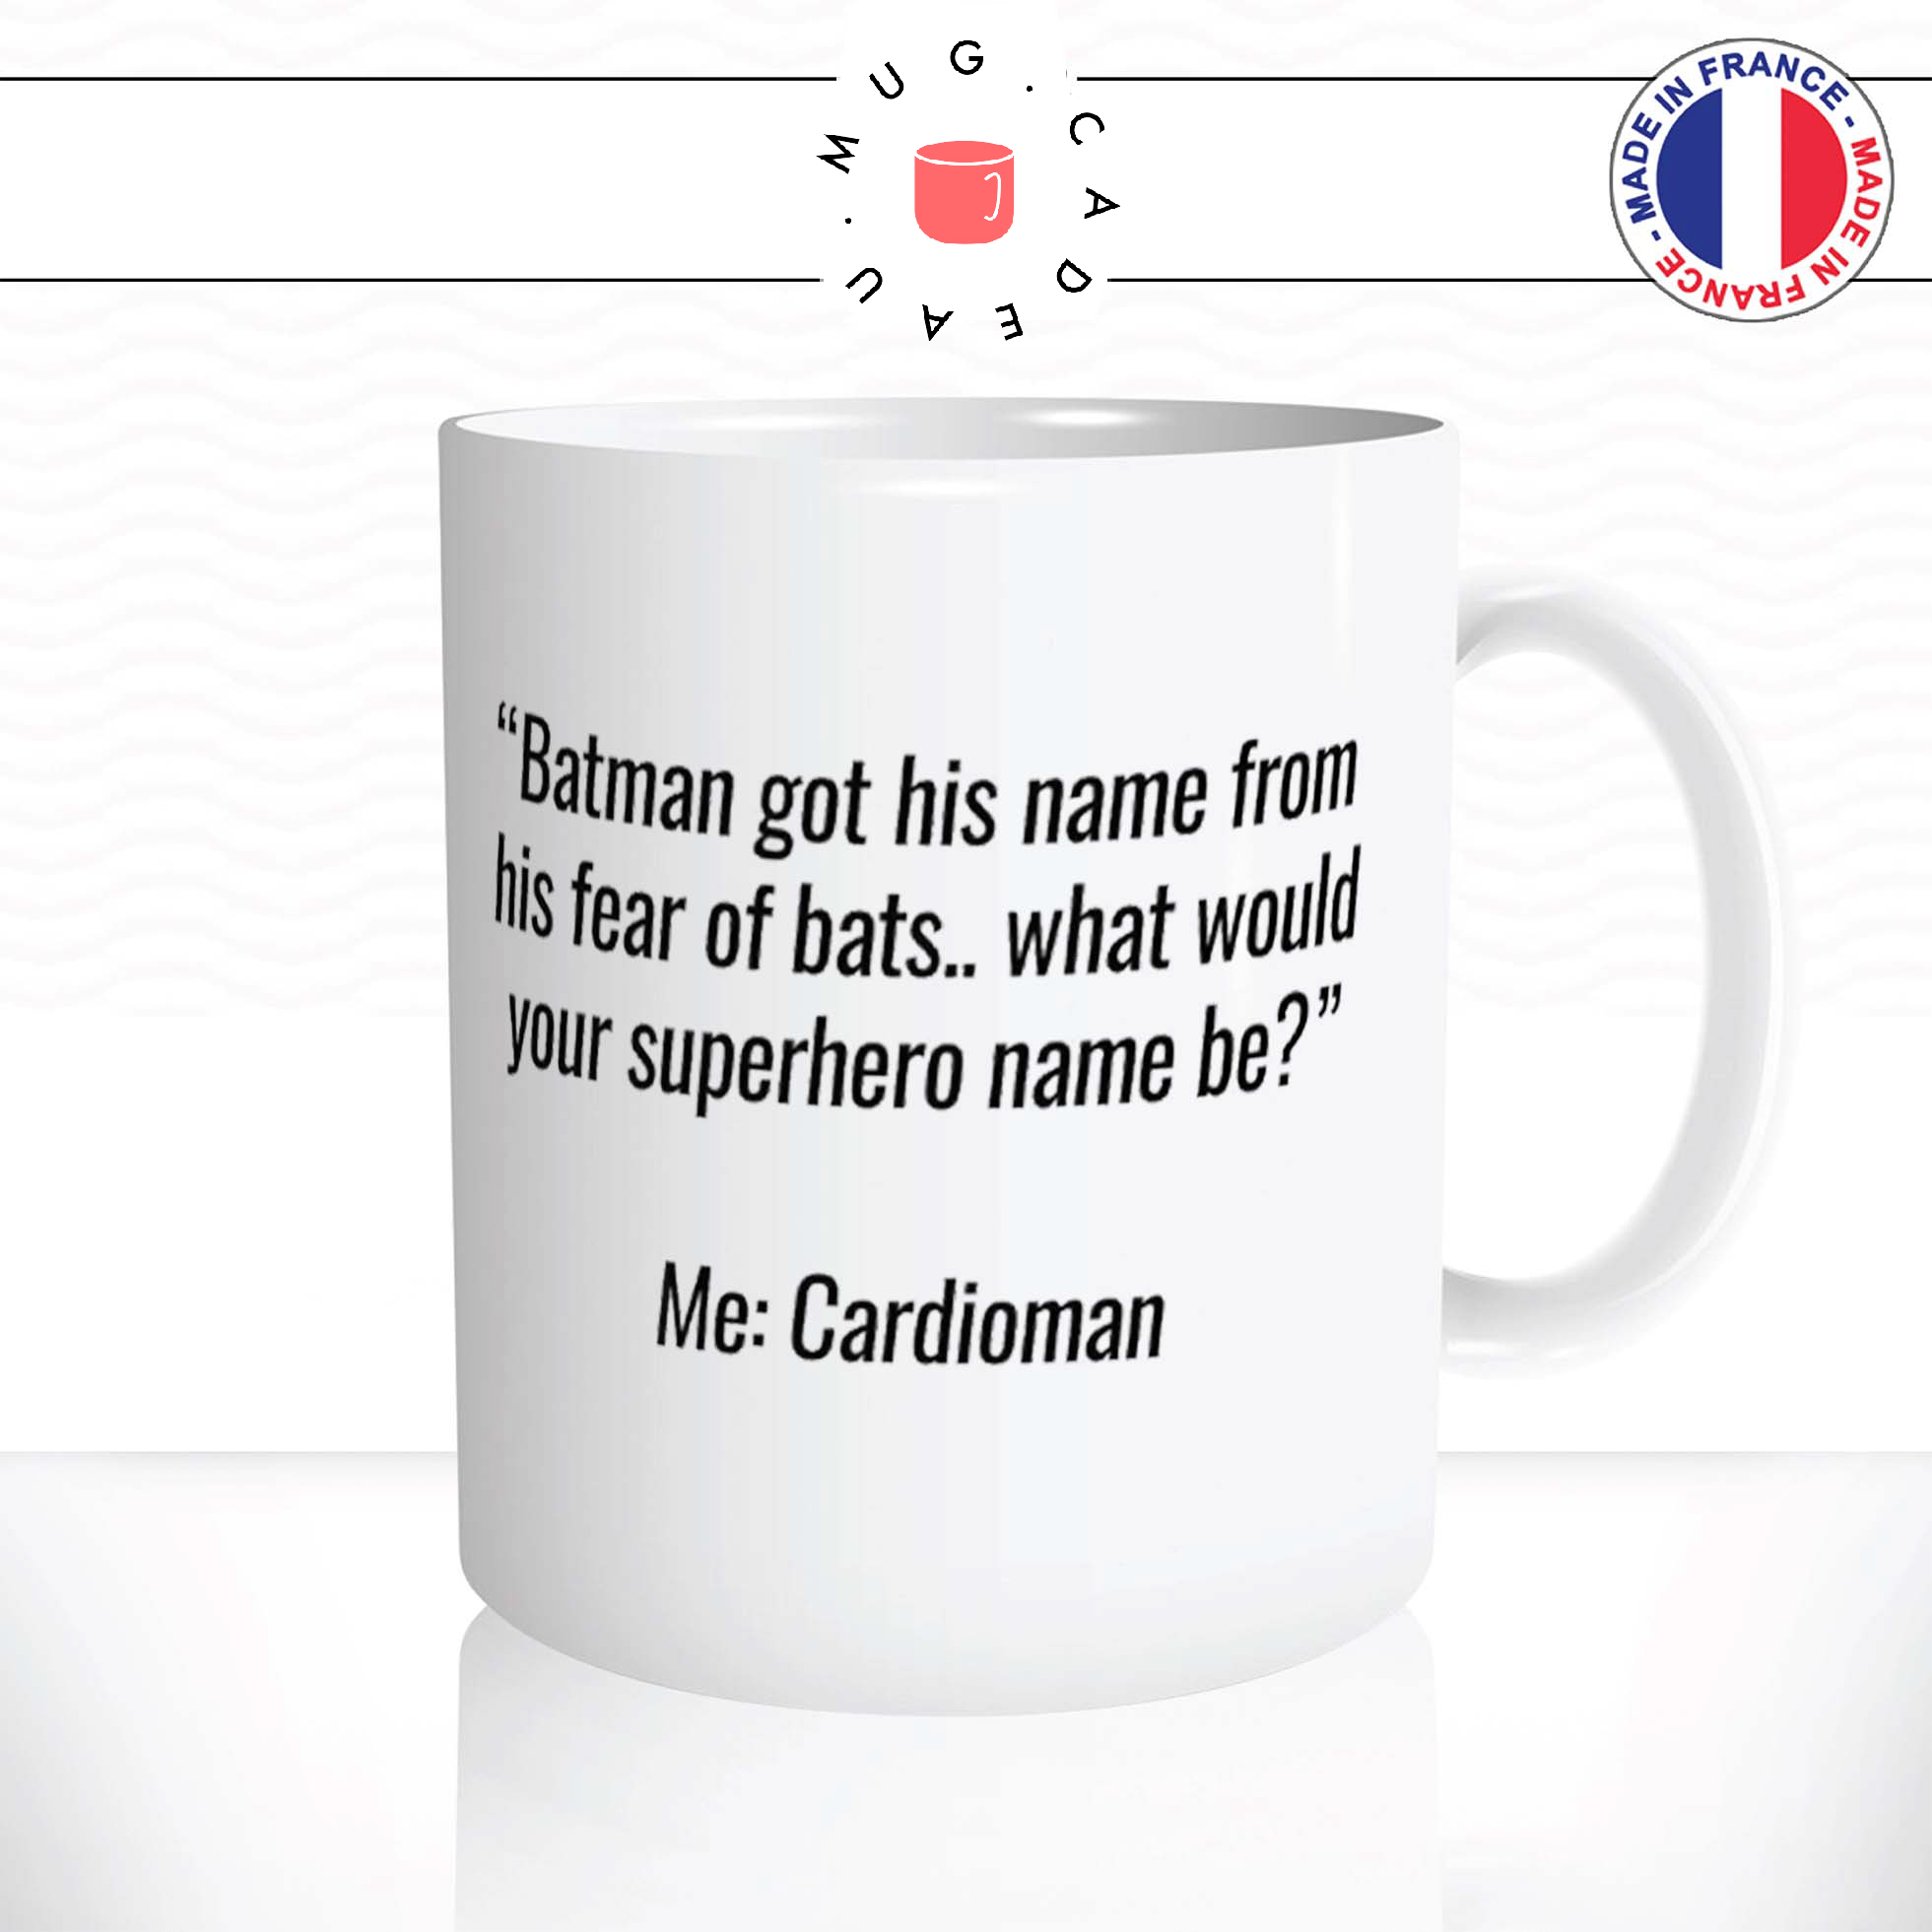 mug-tasse-ref12-citation-drole-humour-batman-superhero-cardioman-sport-cafe-the-mugs-tasses-personnalise-anse-droite